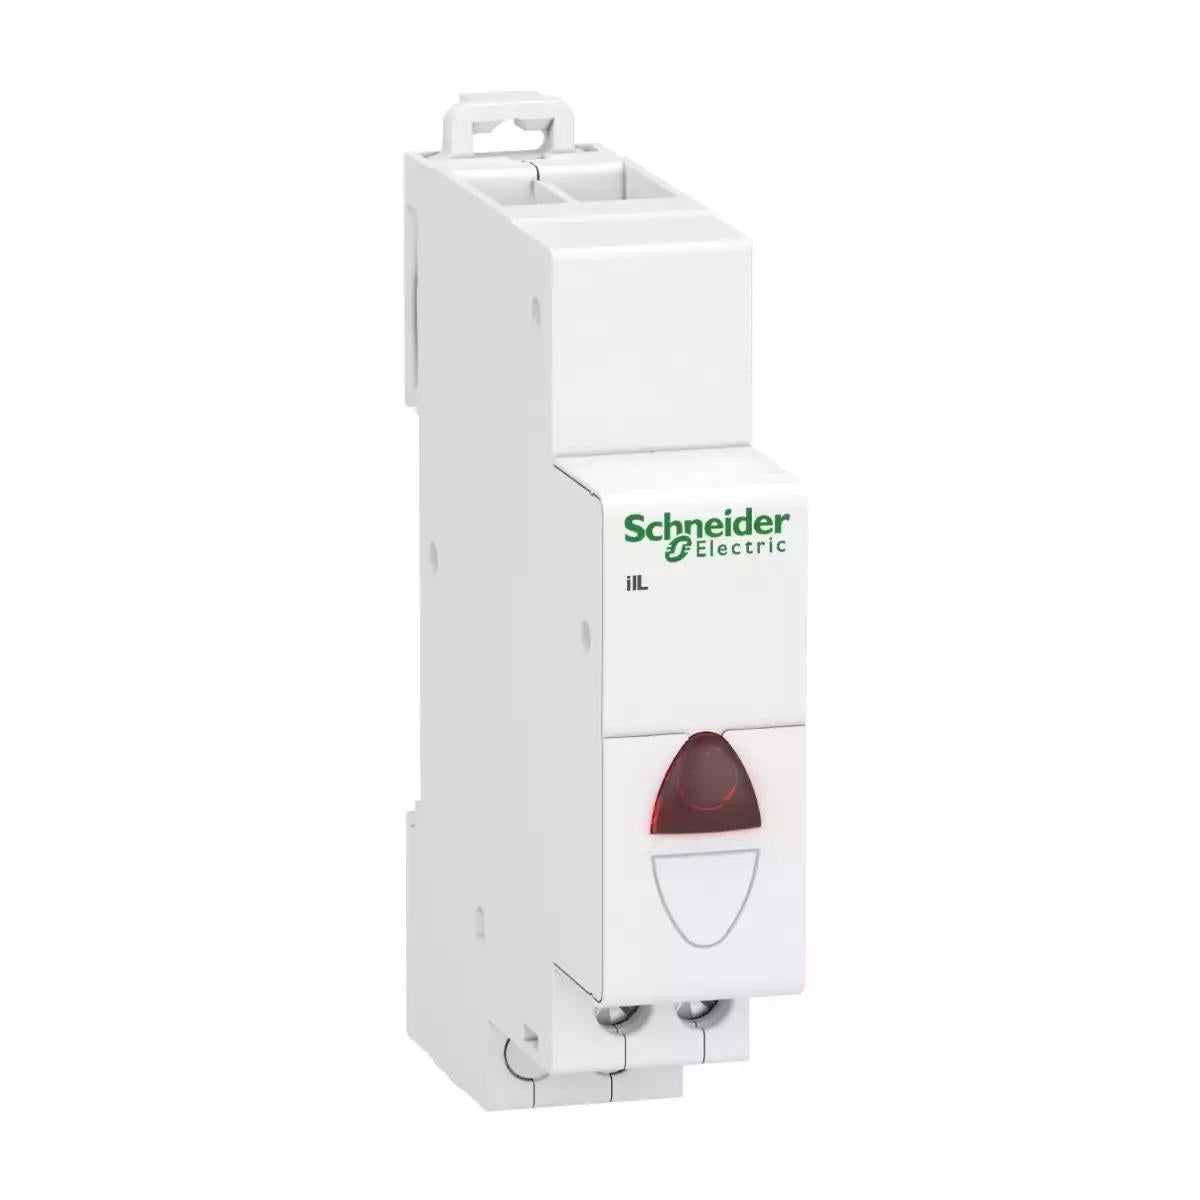 Schneider Electric Acti9 iIL single indicator light - Red - 110-230 Vac